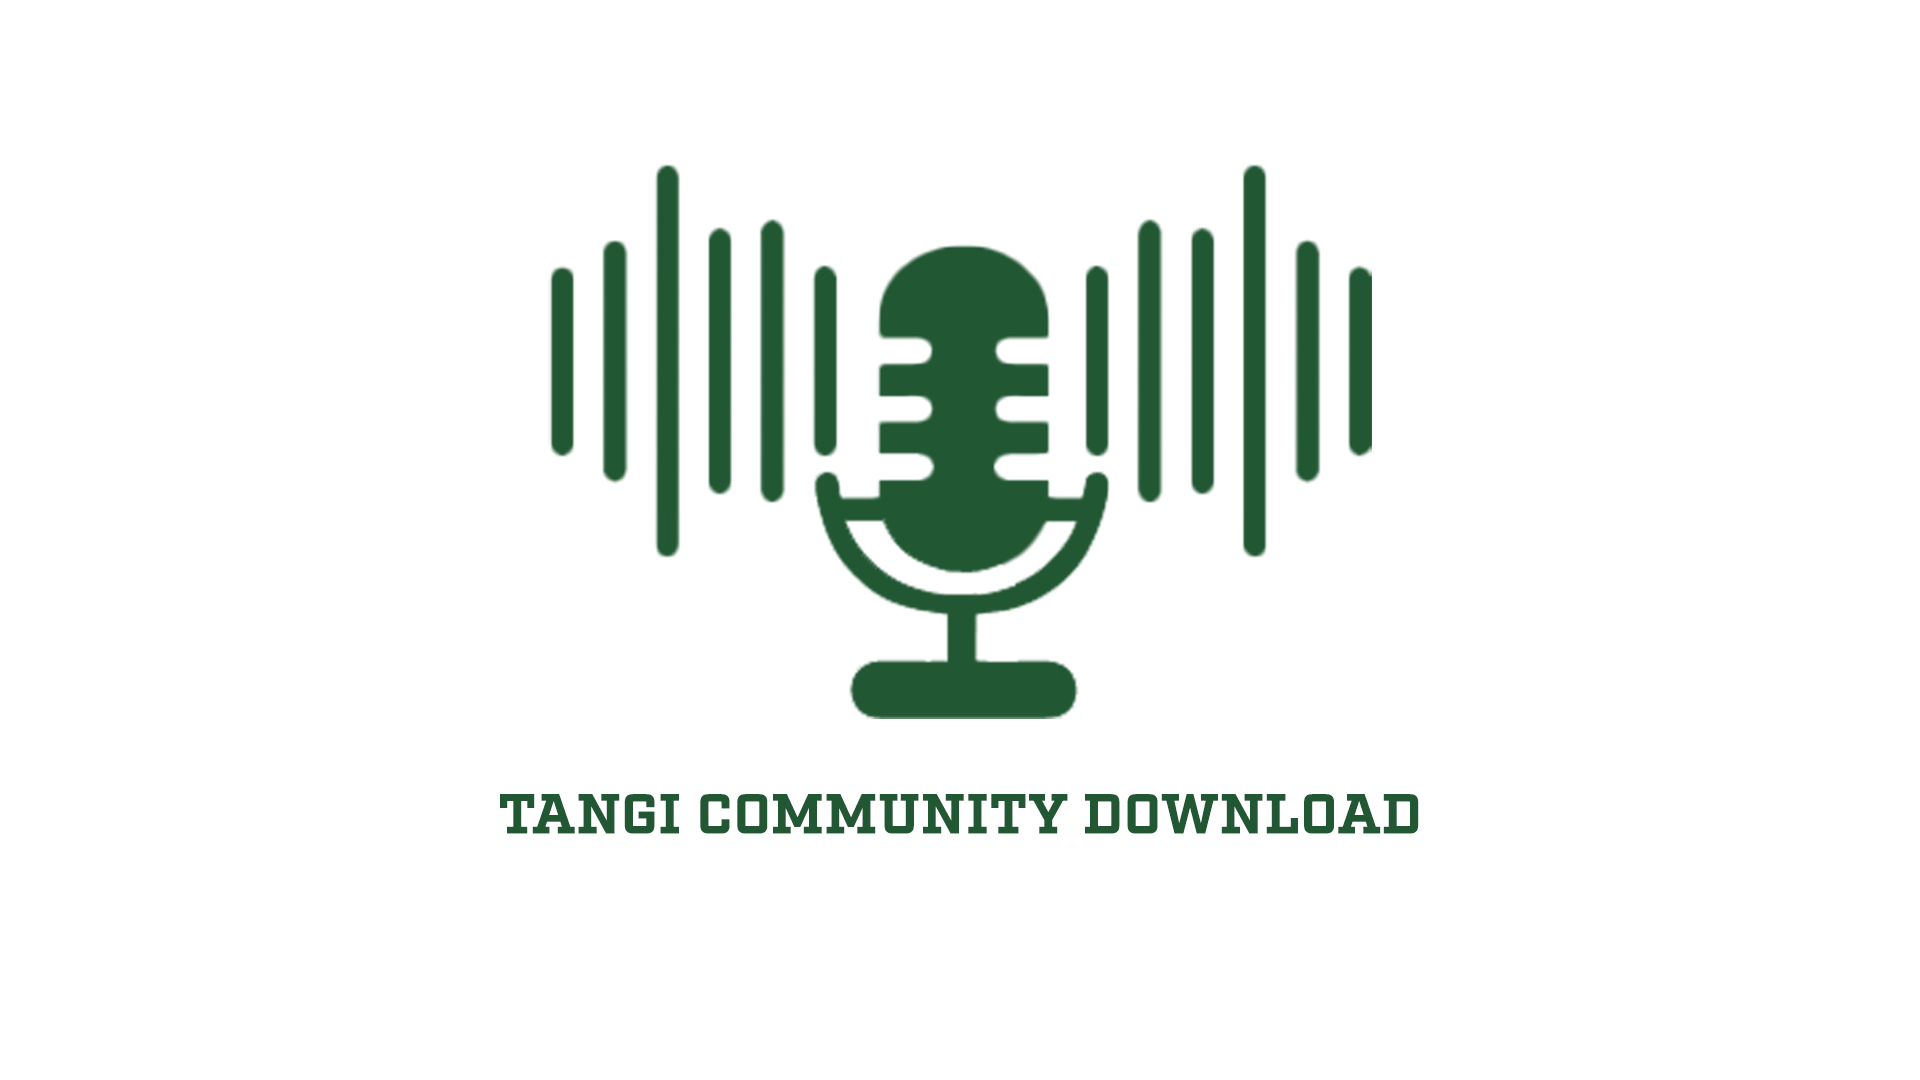 Tangi Community Download logo